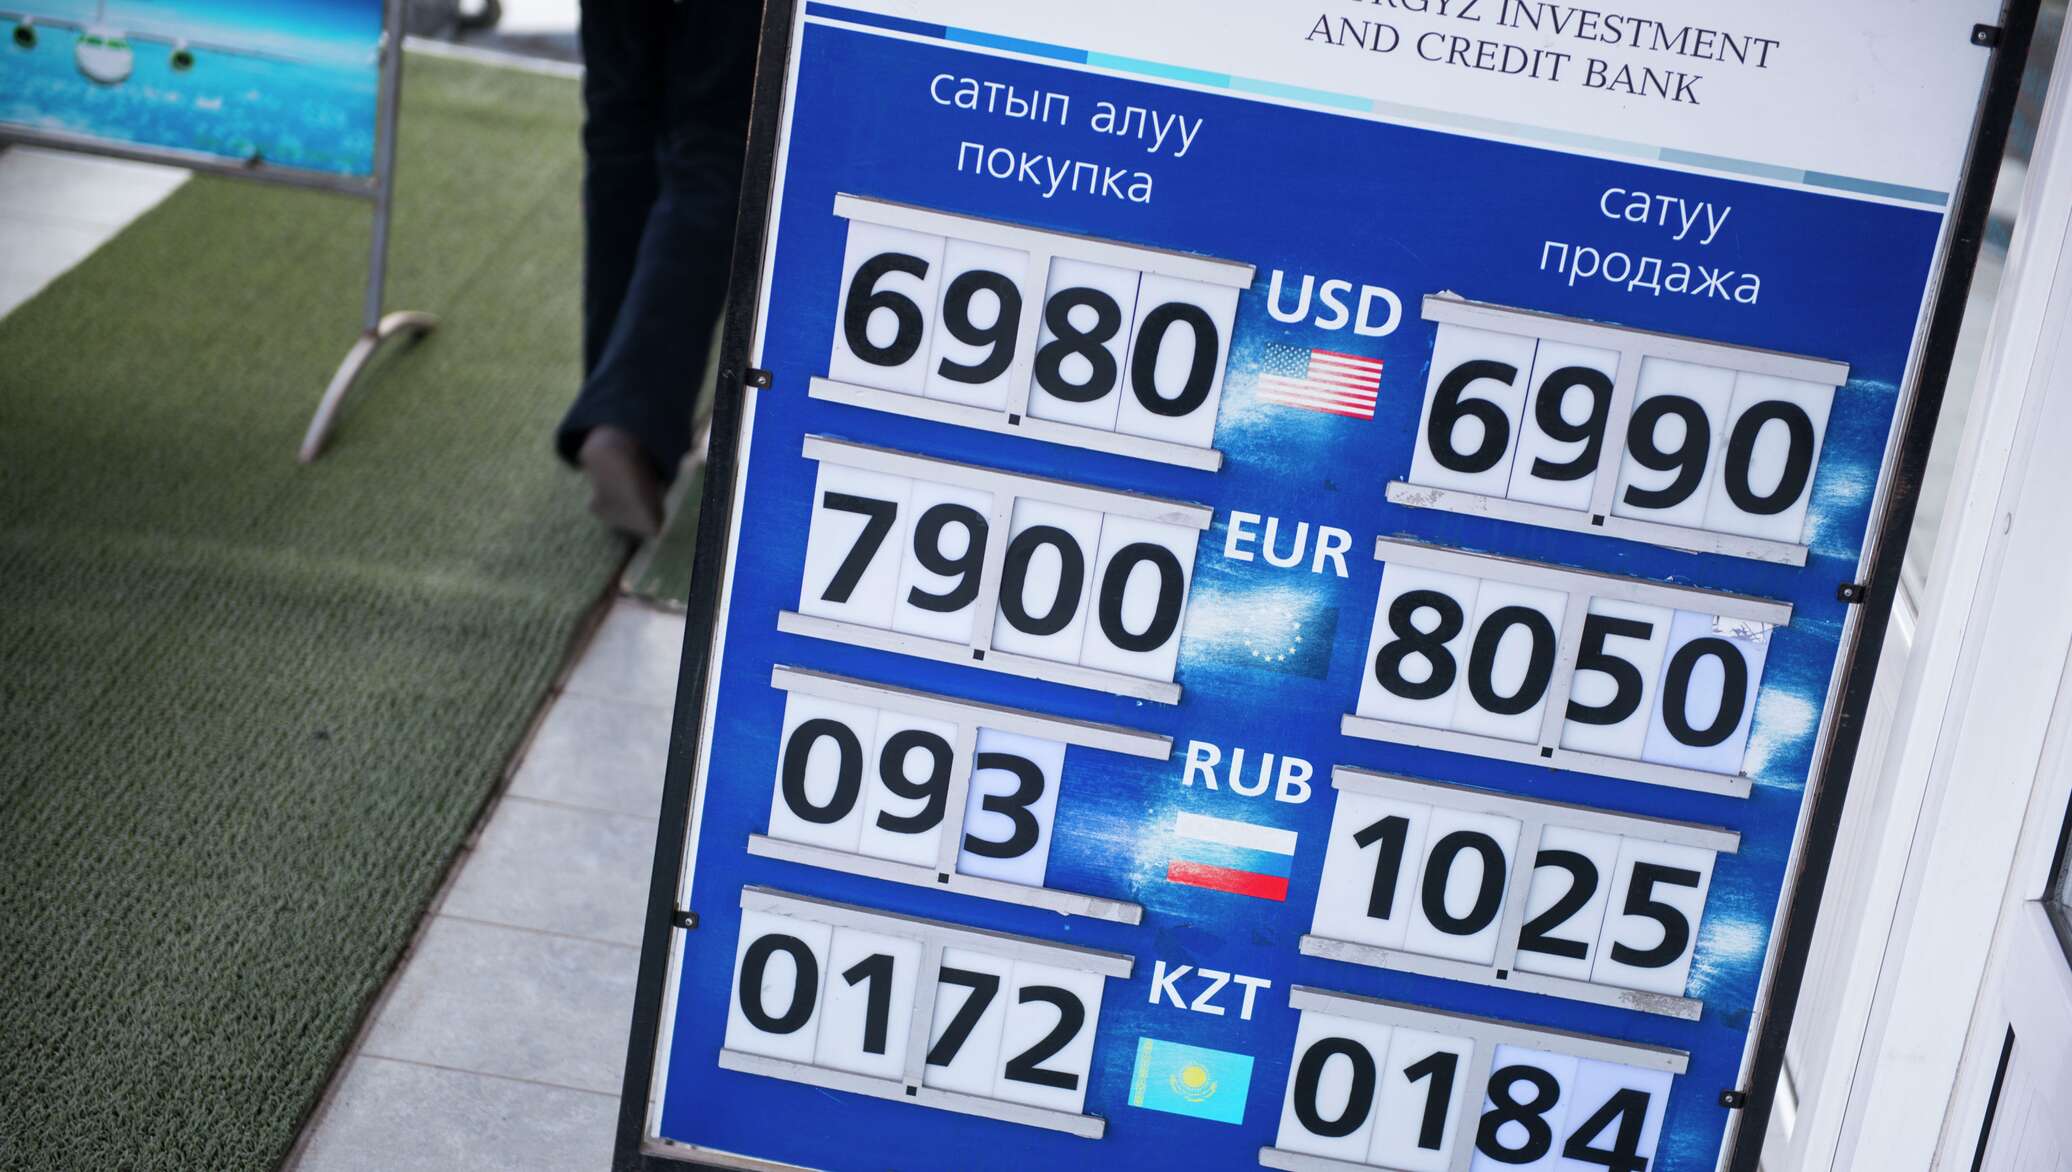 Доллар сом сколько. Курсы валют. Валюта Кыргызстана сом. Курсы валют киргизский сом. Валюта Кыргызстана рубль на сом.